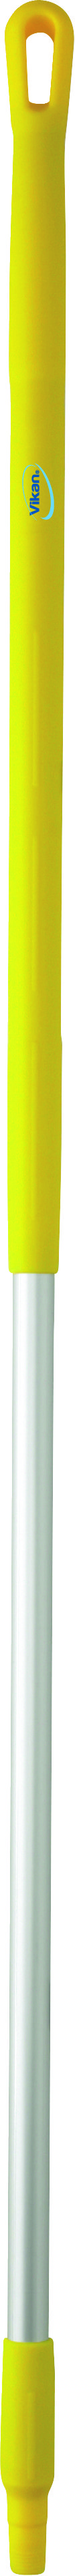 Рукоятка Vikan эргономичная алюминиевая, 1510 мм, желтая